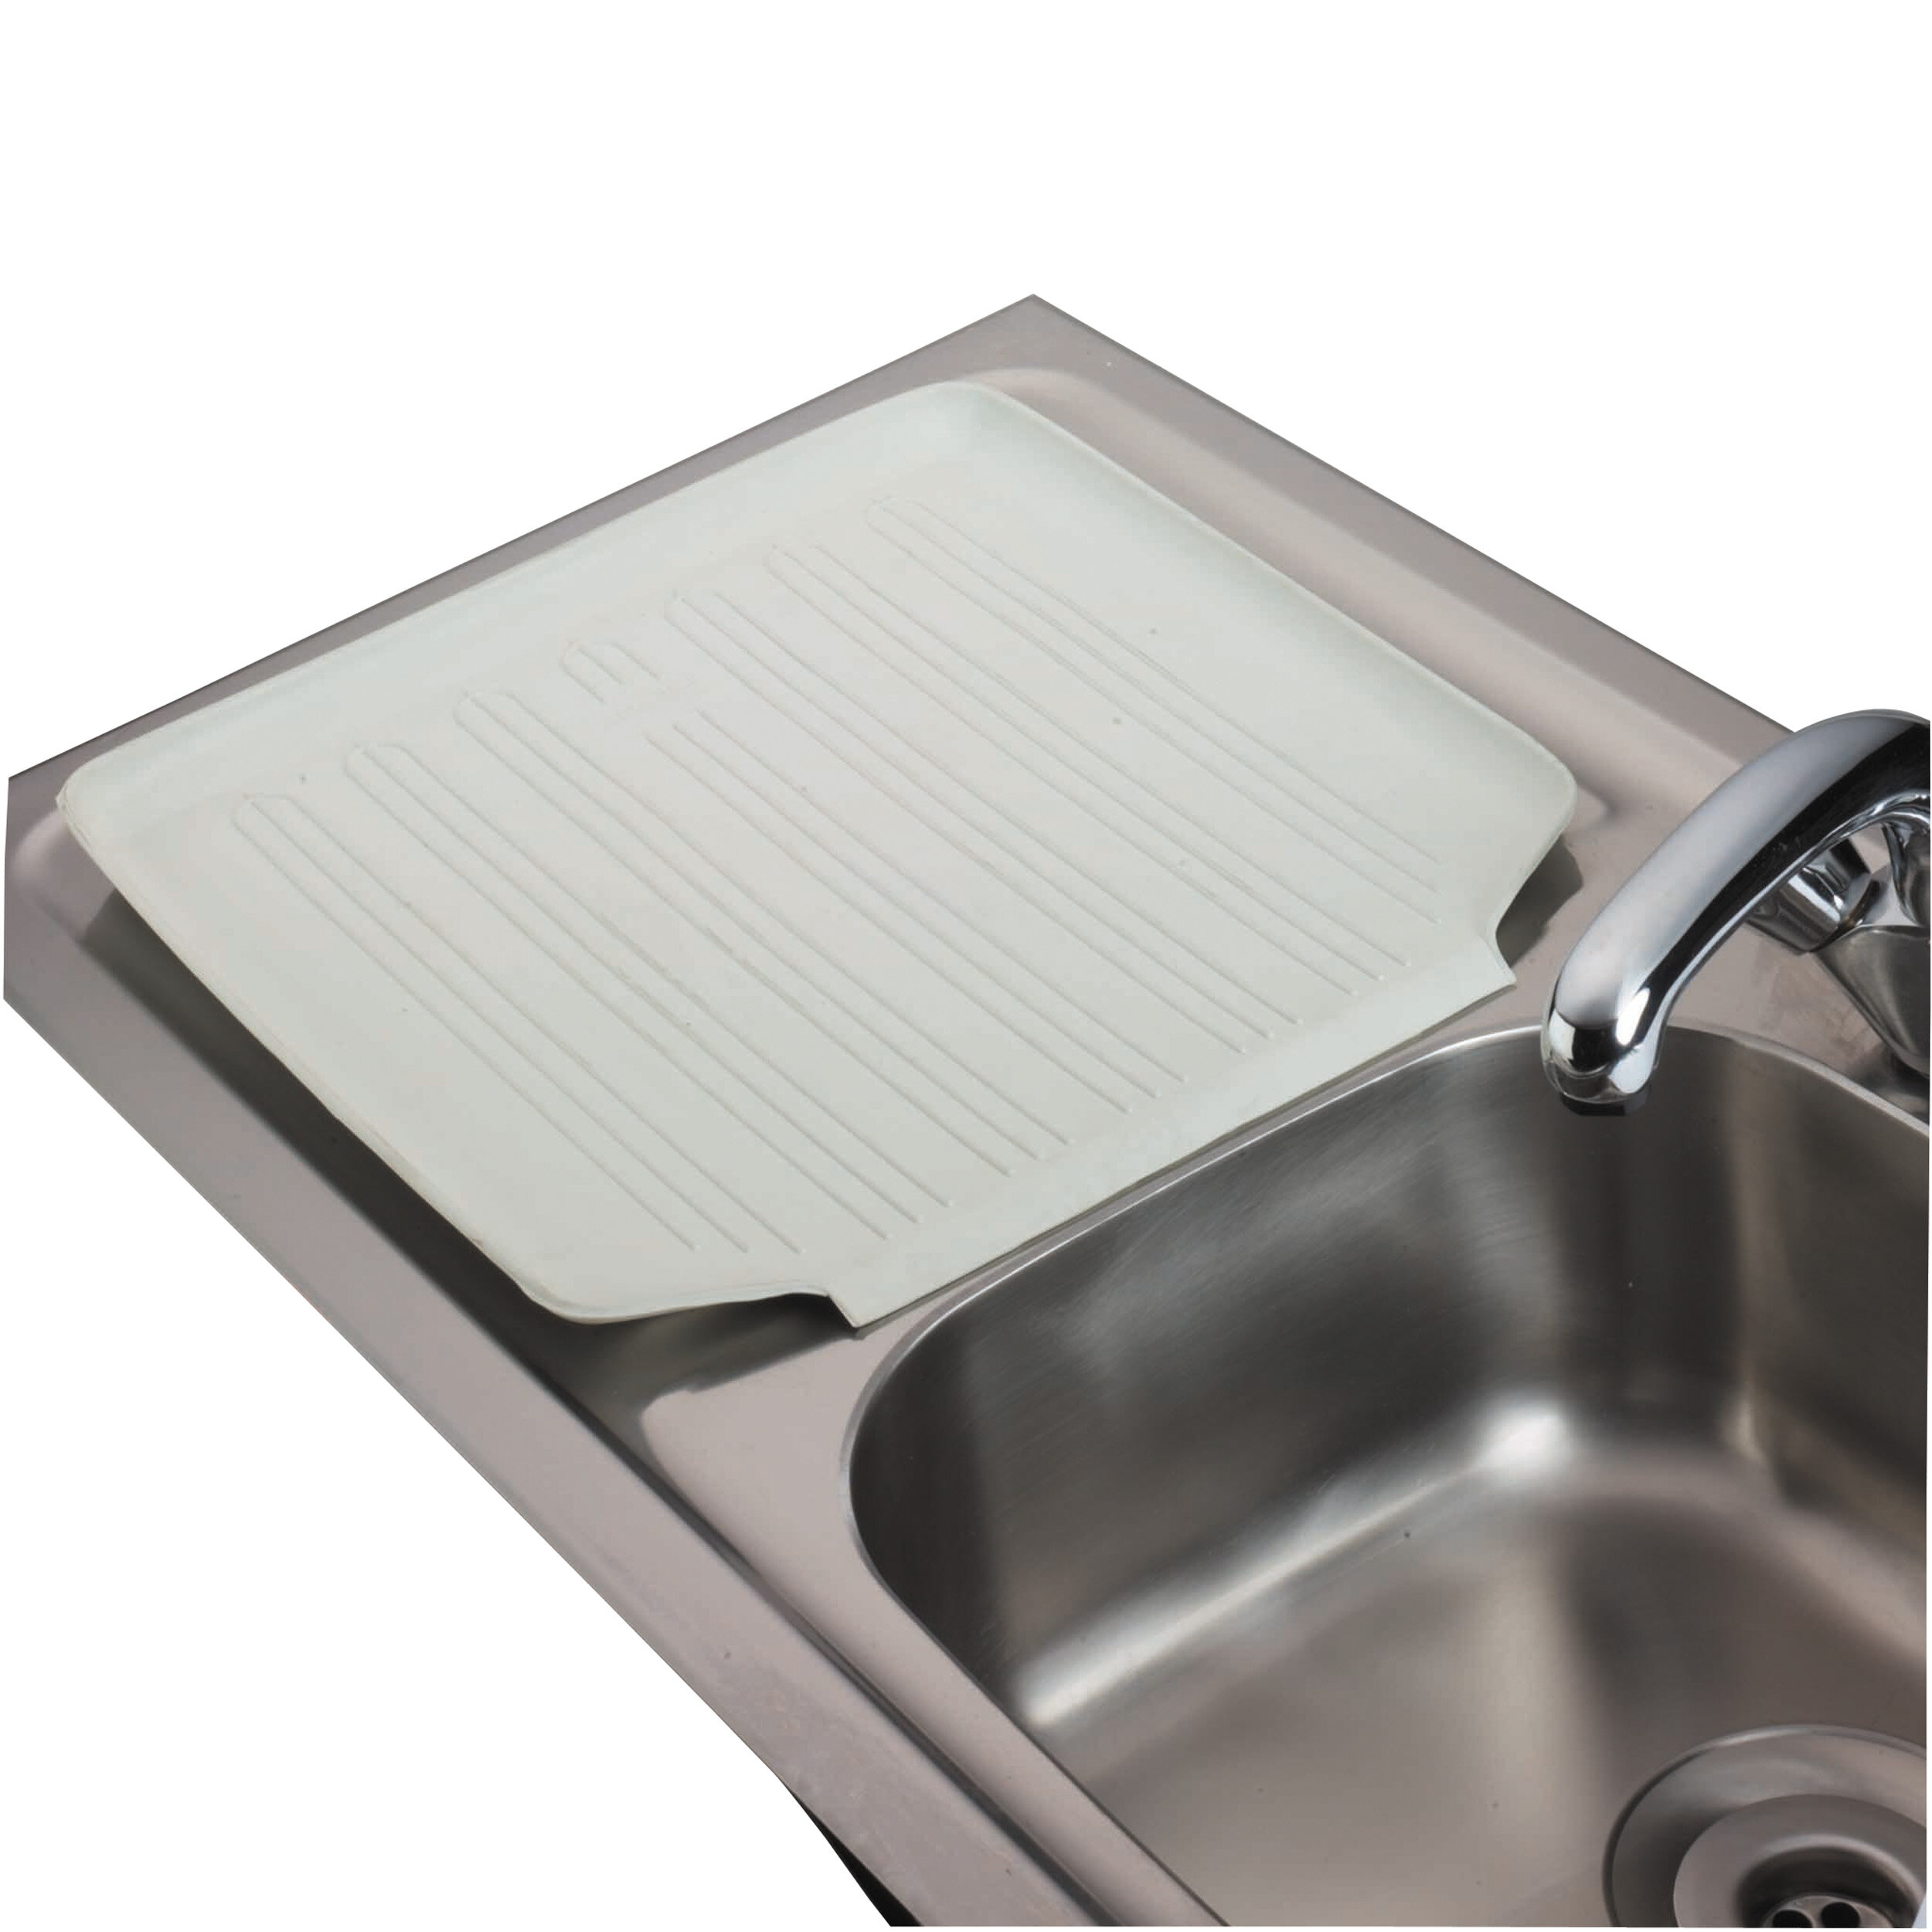 Rubber Non-slip Mat Draining Board Drainer Drying Pad Kitchen Sink Pad UK